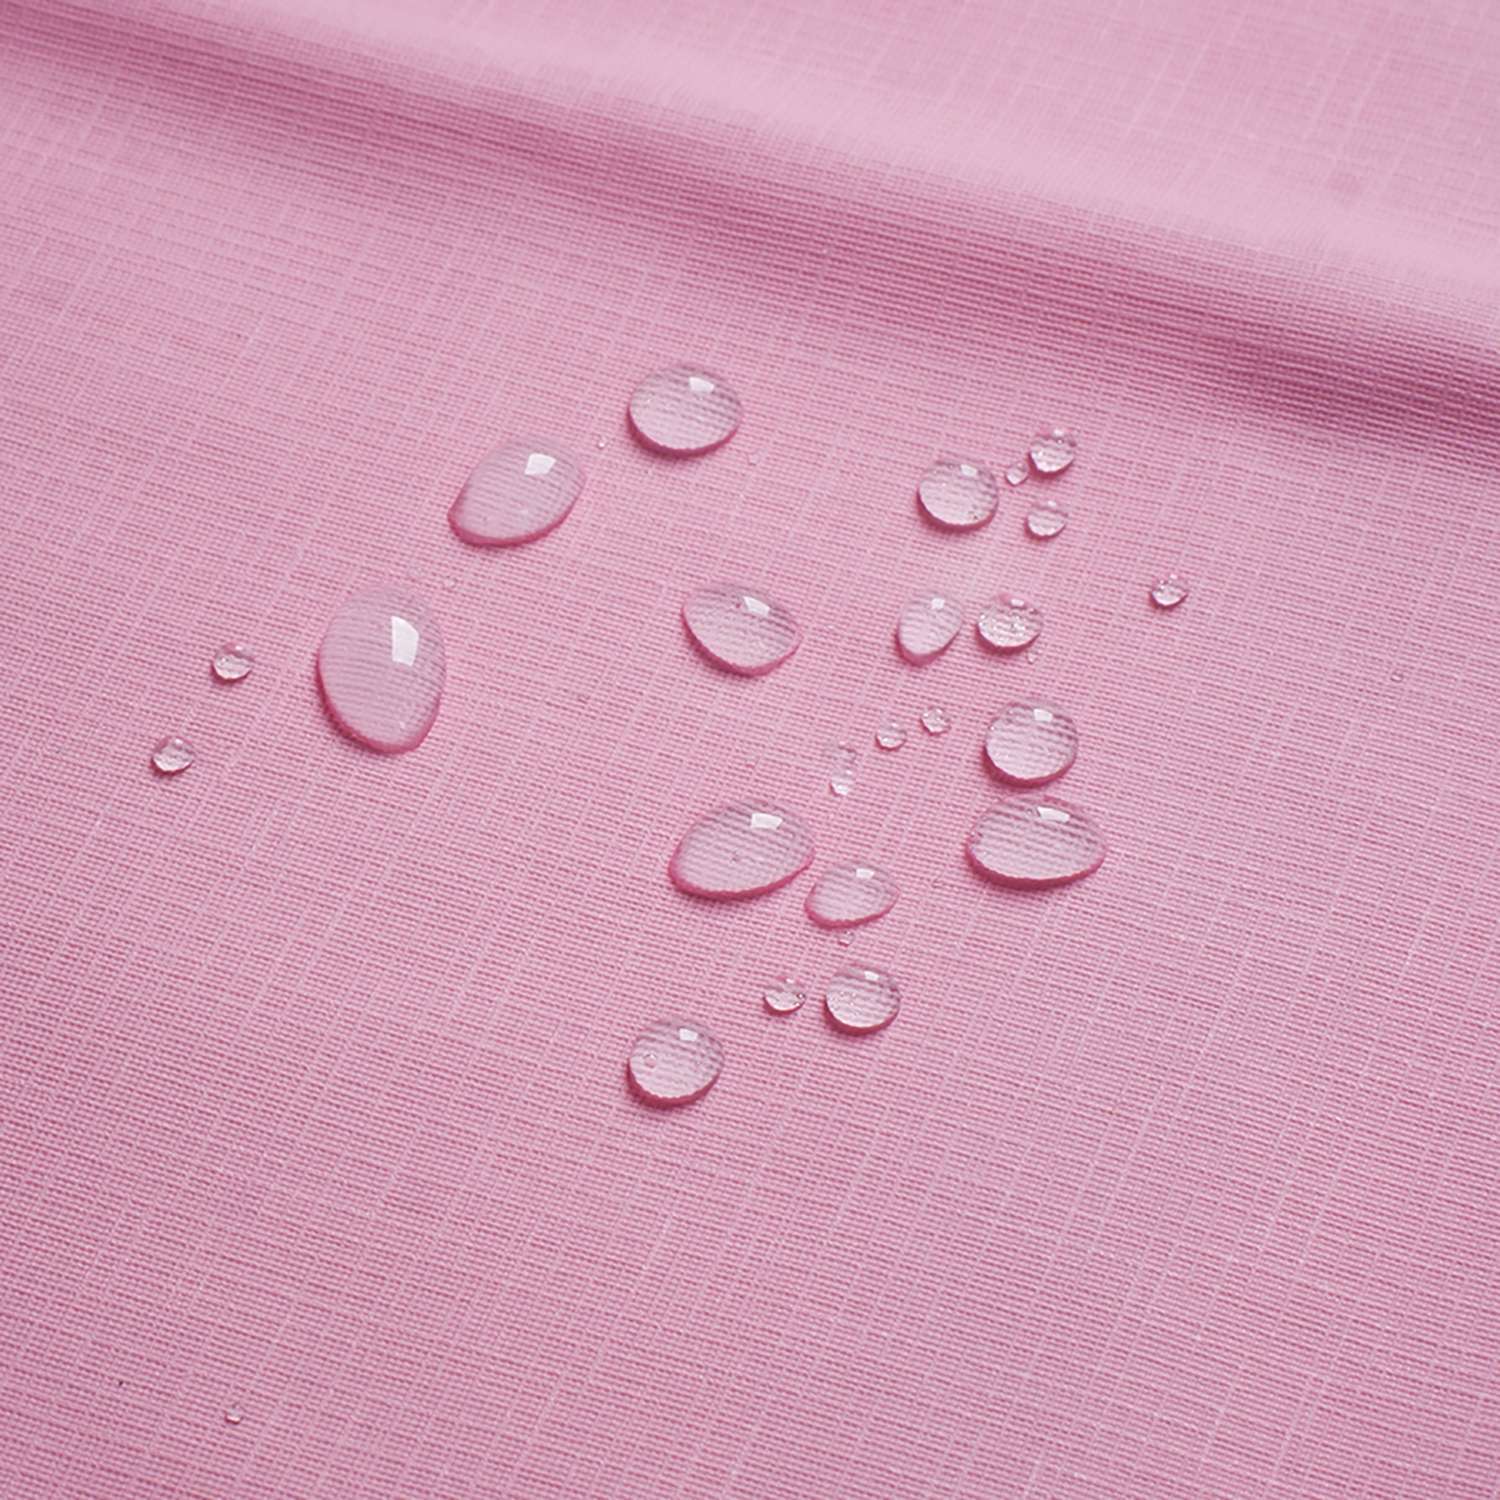 Клеенка Чудо-чадо подкладная в кроватку 100х140 без окантовки розовая - фото 5